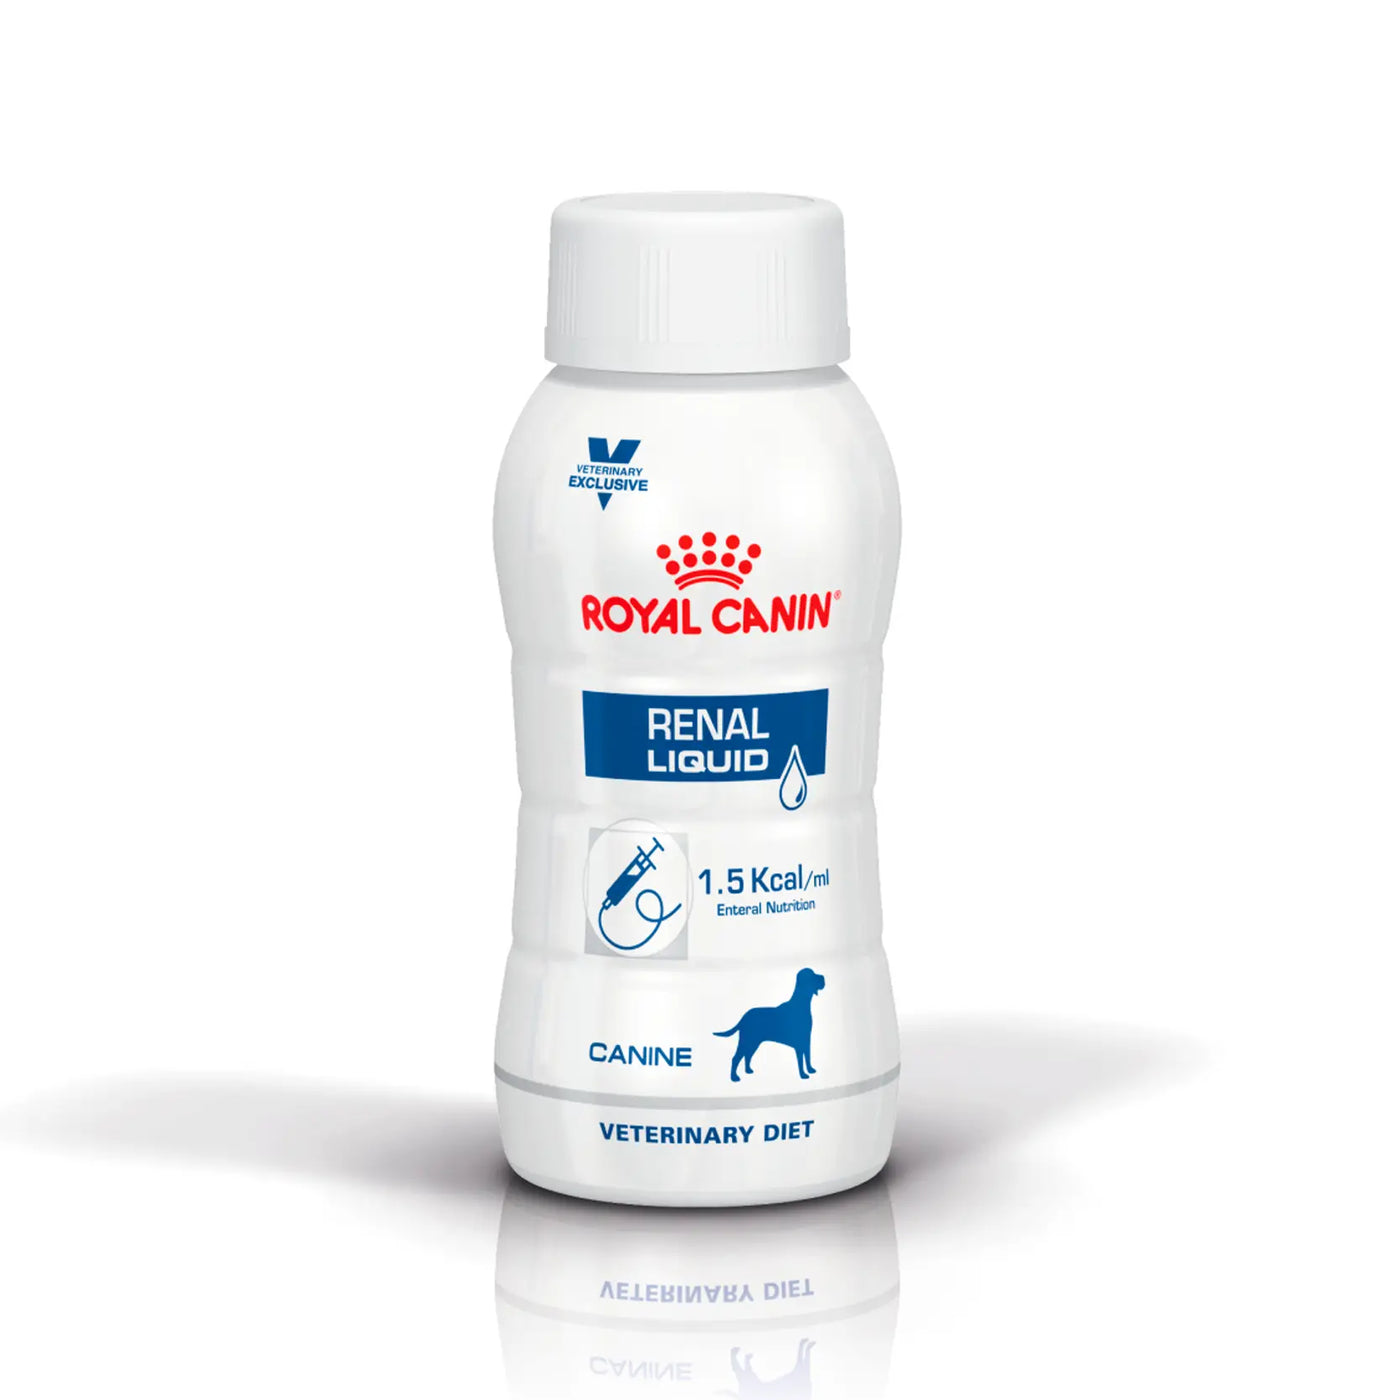 Royal Canin - Canine Renal Liquid 200ml